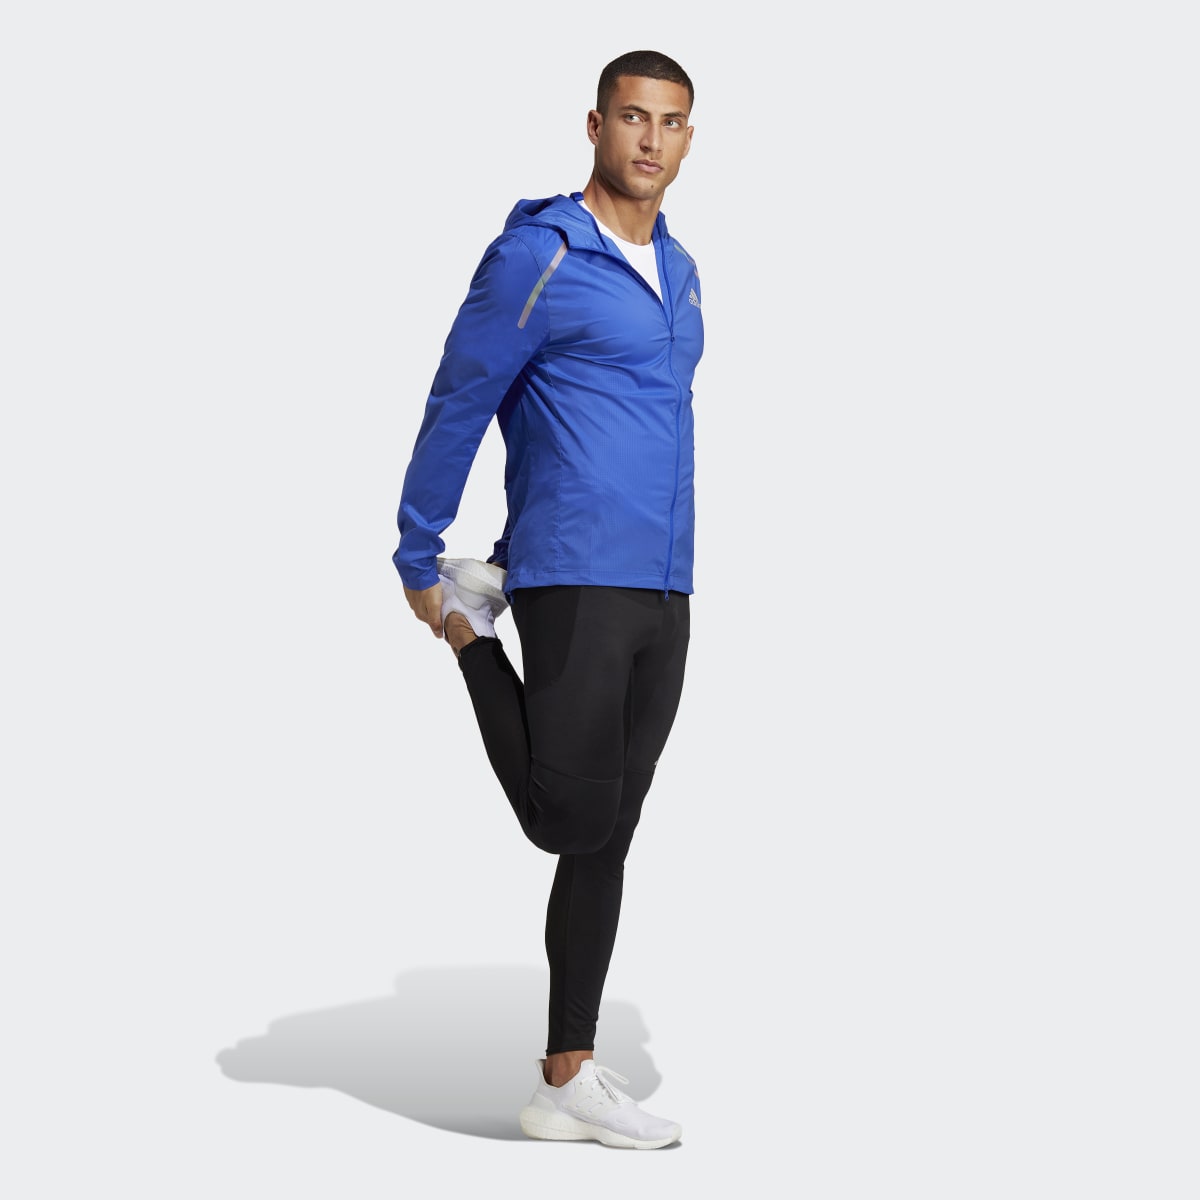 Adidas Marathon Jacket. 4